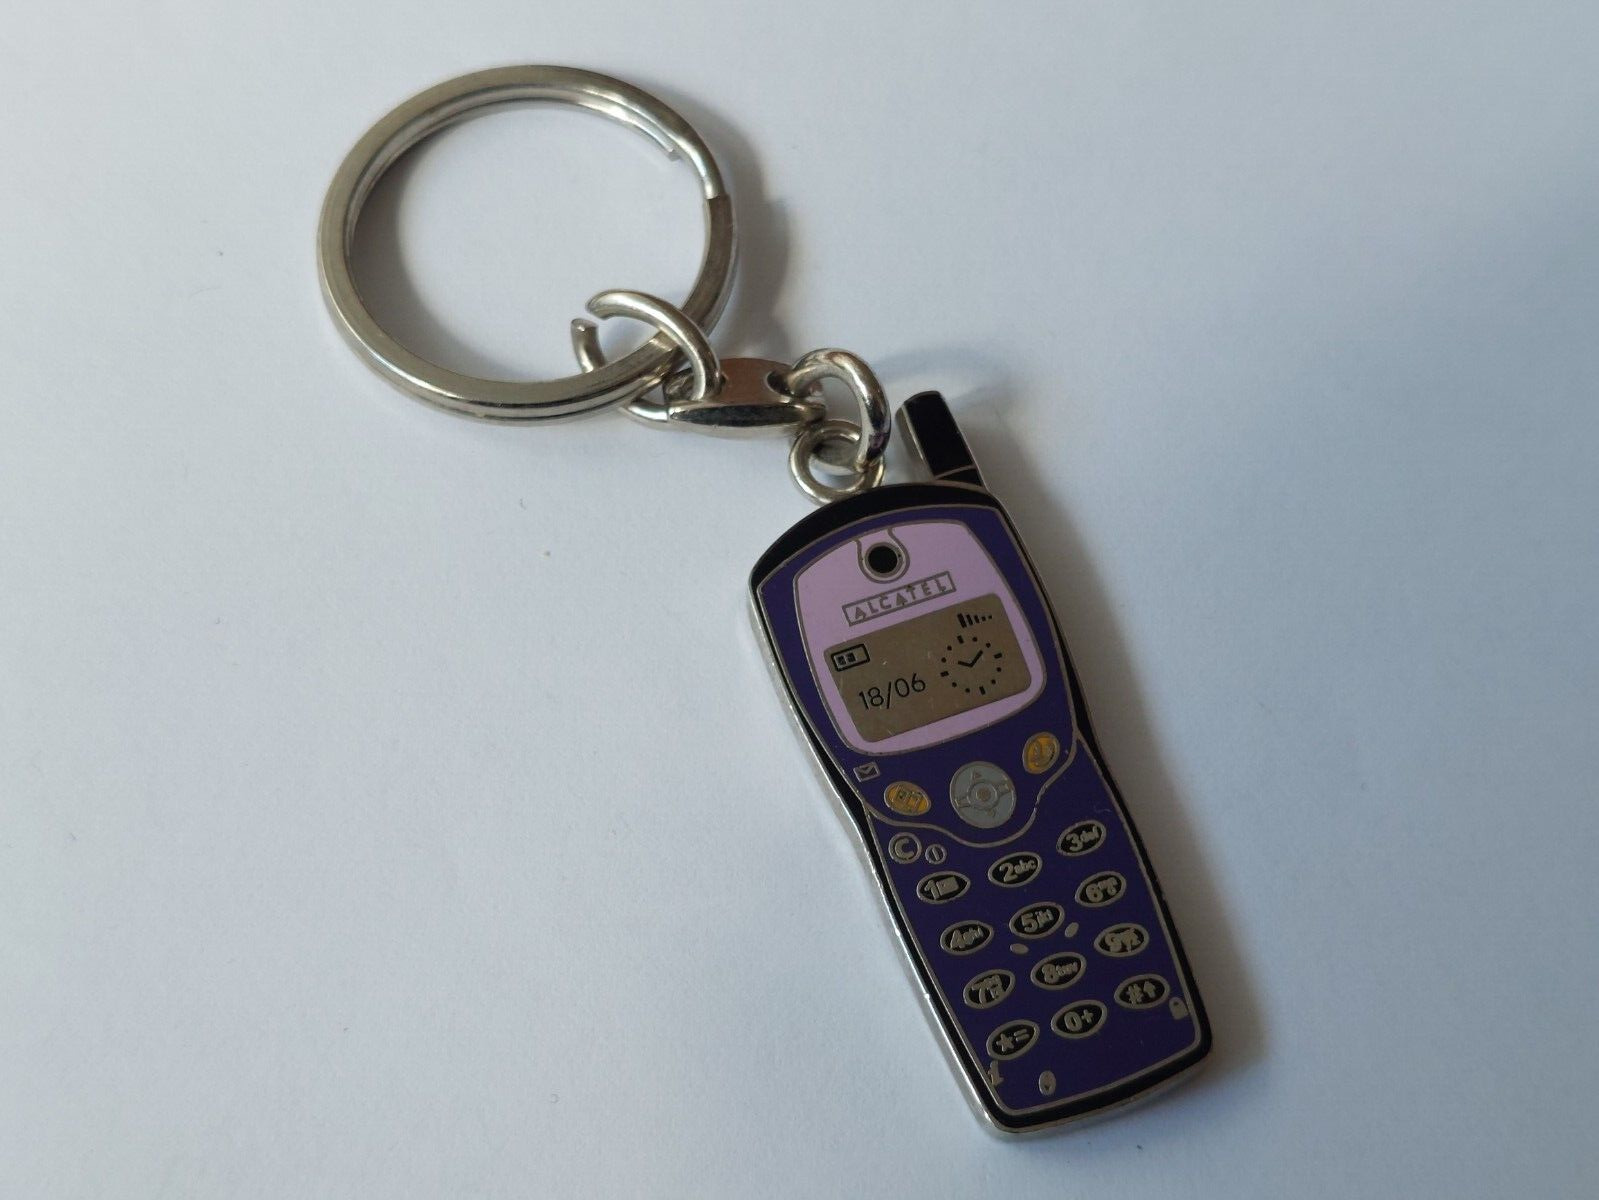 Vintage Alcatel Cell phone Keychain/ Arthus-Bertrand key ring mobile phone